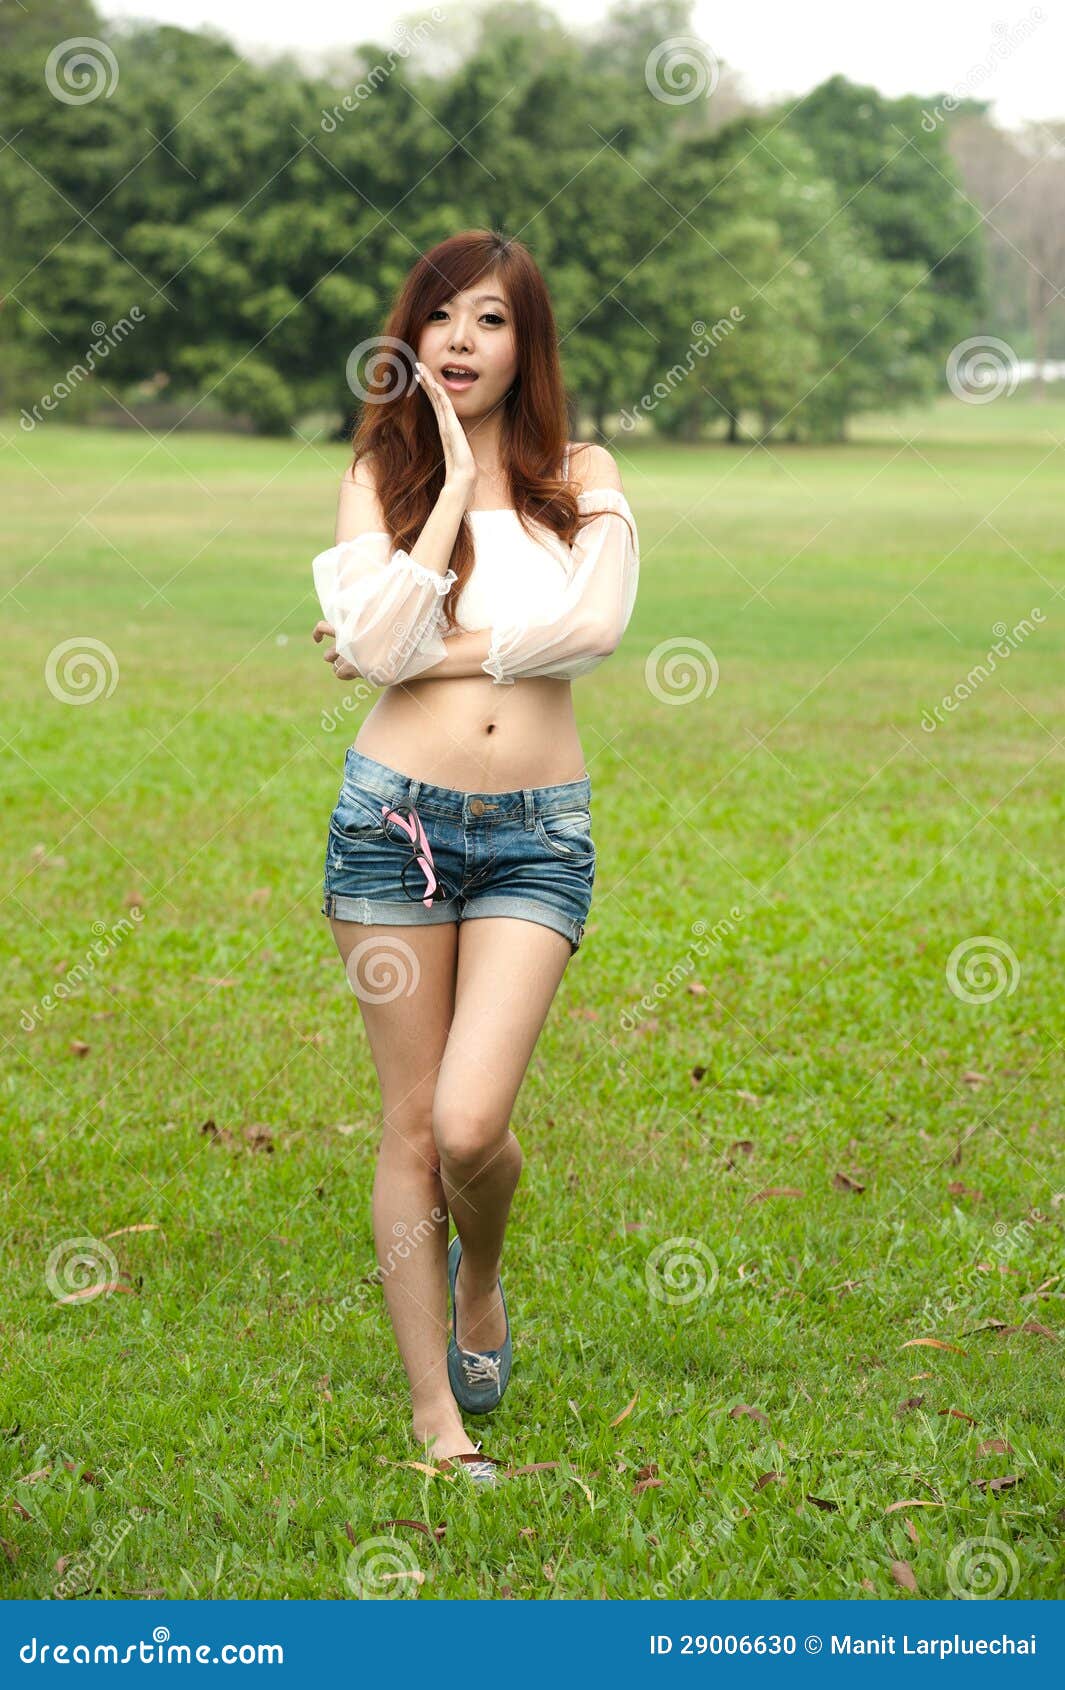 https://thumbs.dreamstime.com/z/pretty-thai-woman-posing-lawn-29006630.jpg